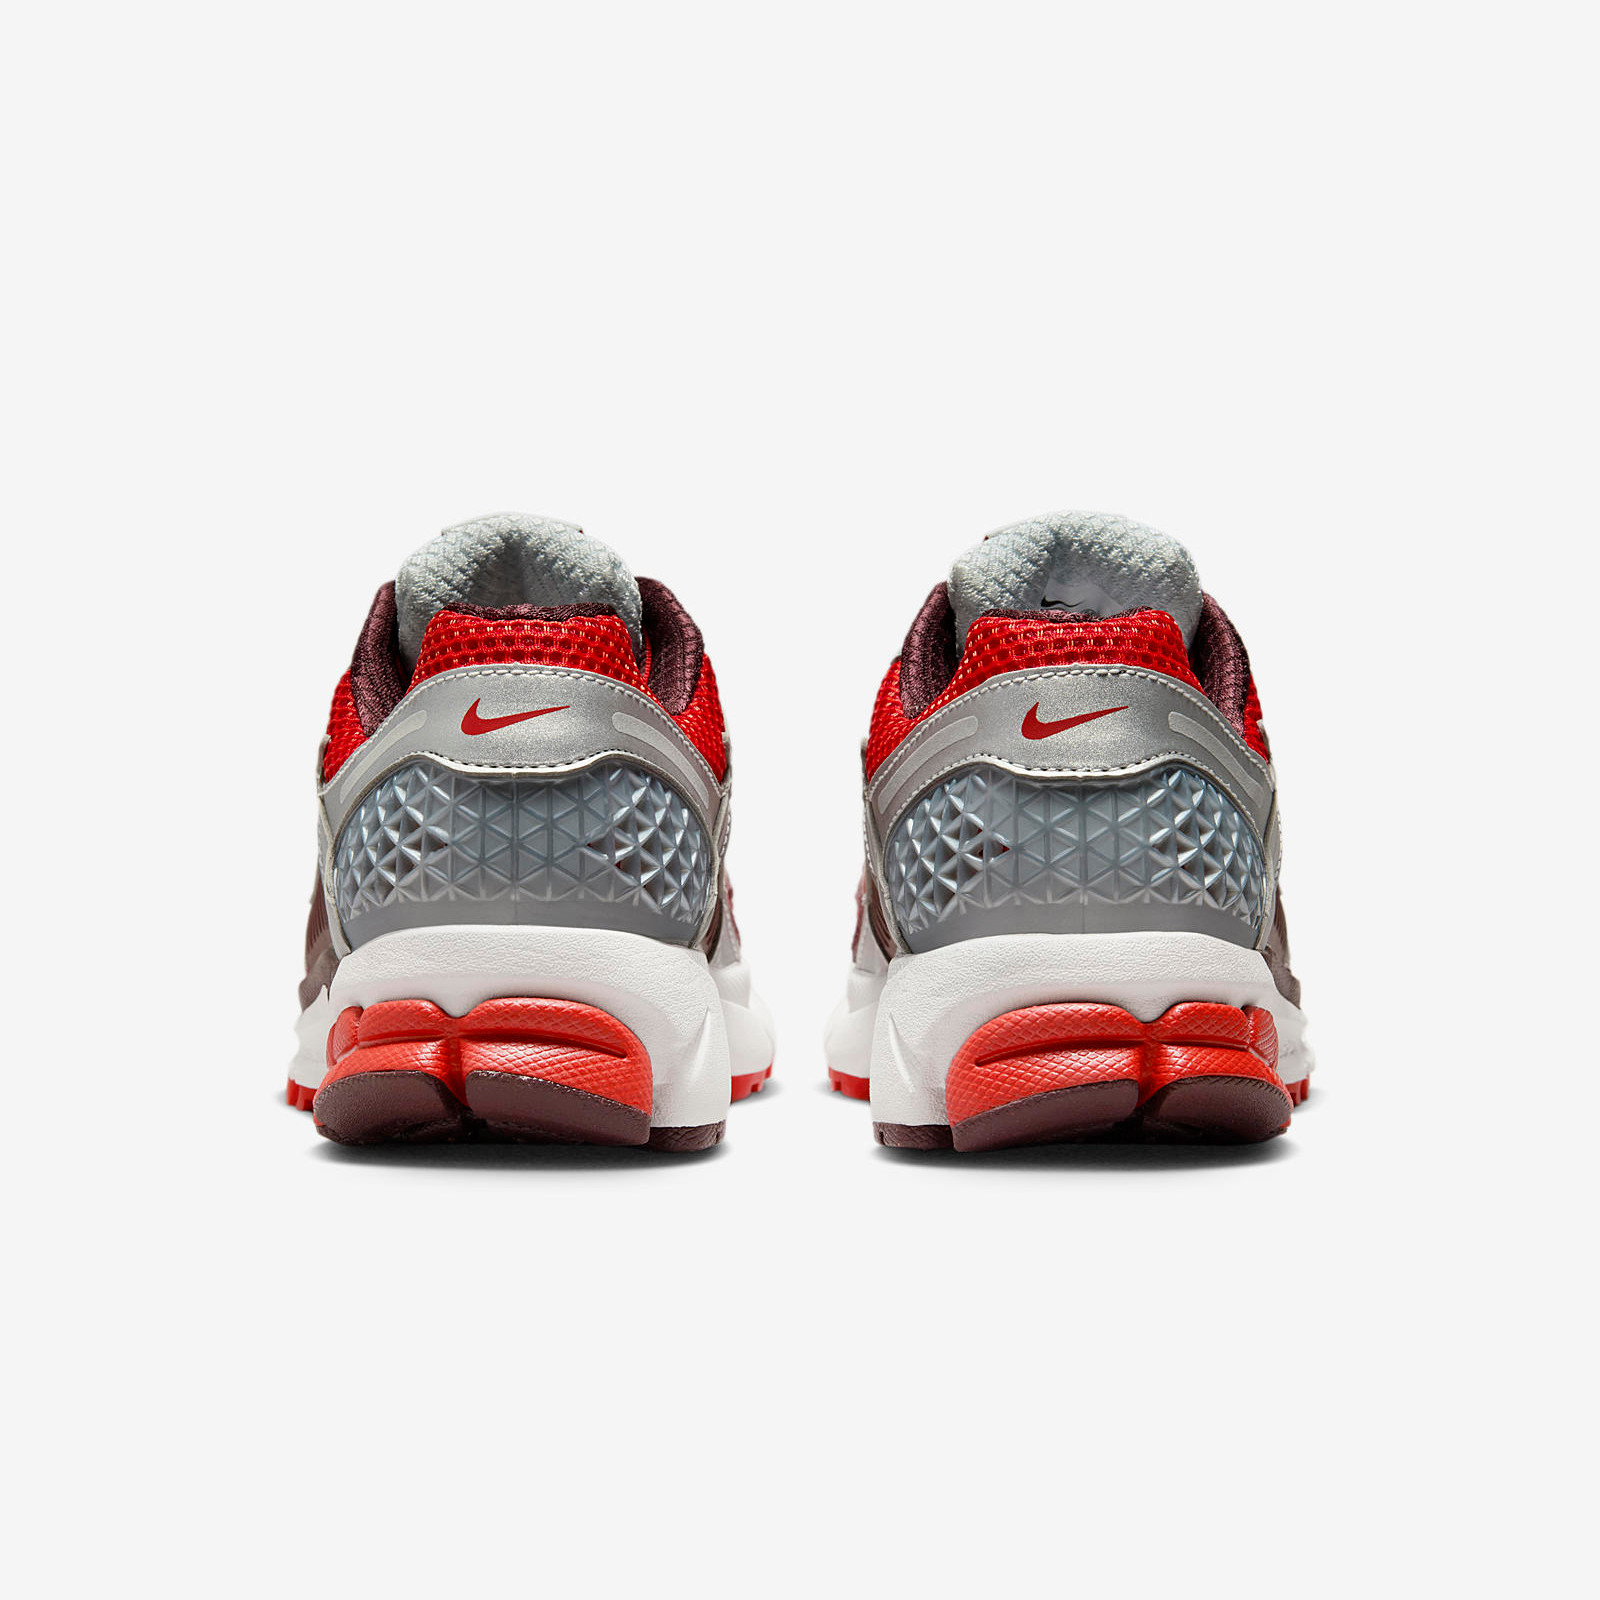 Nike Vomero 5
Red / Platinum